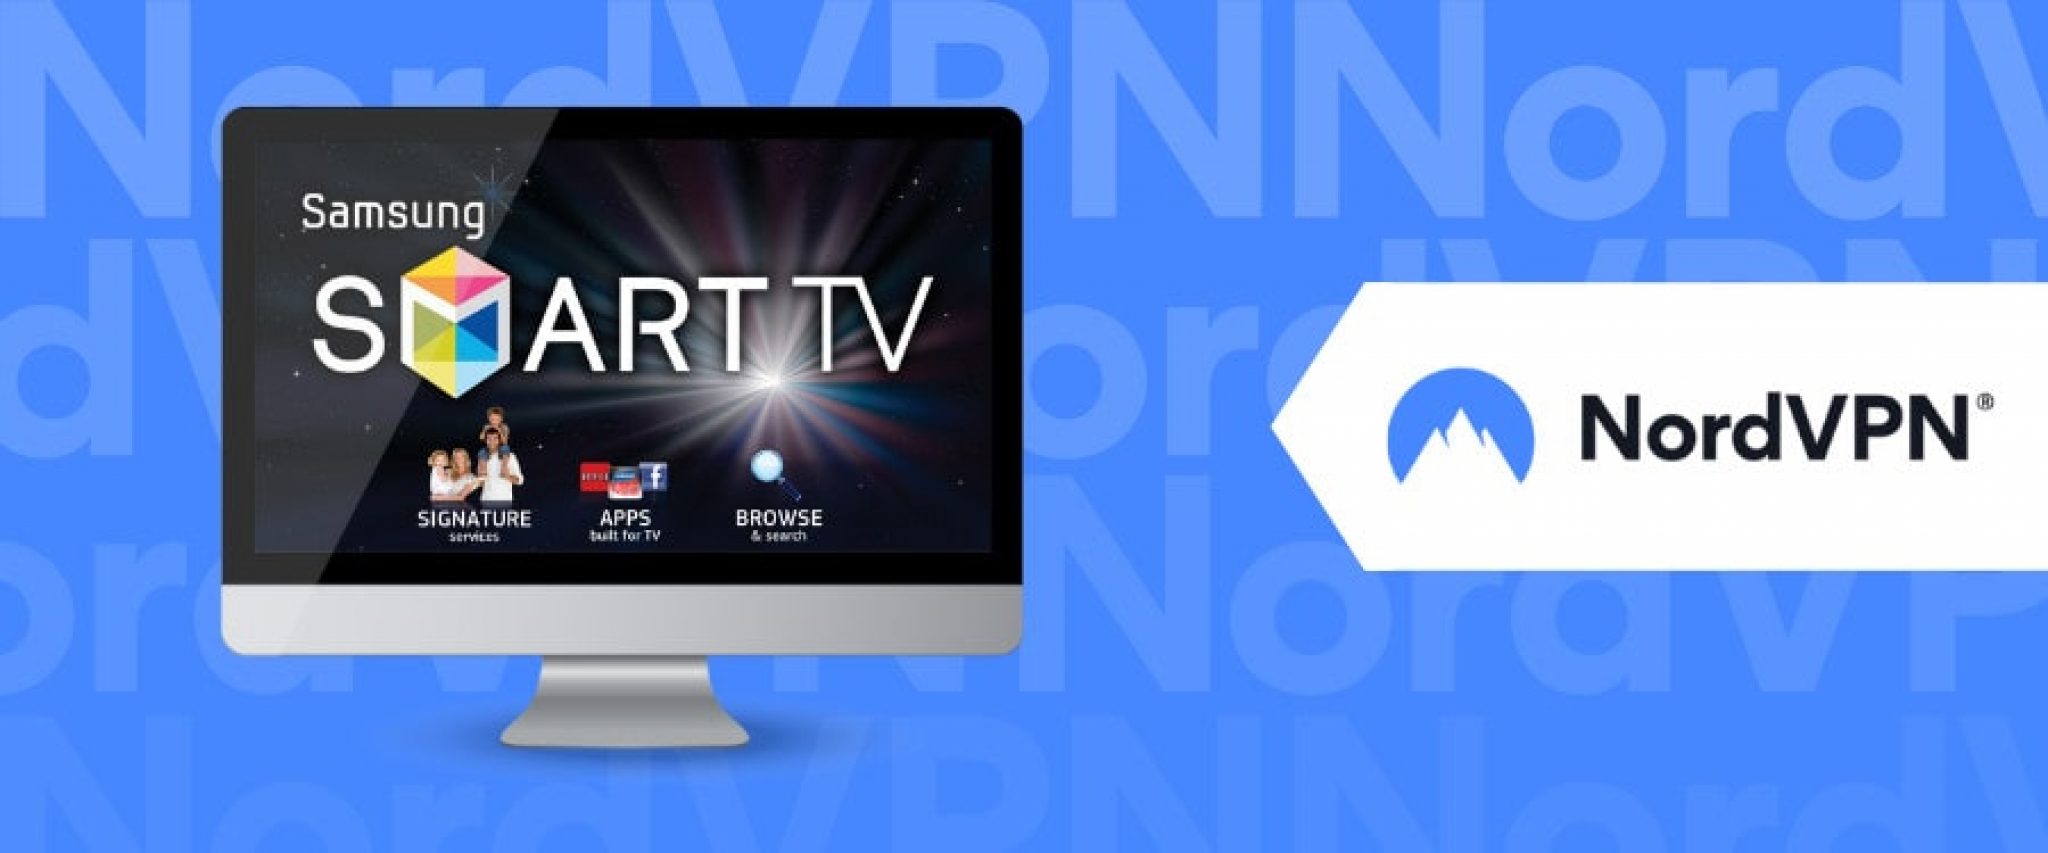 download nordvpn on samsung smart tv